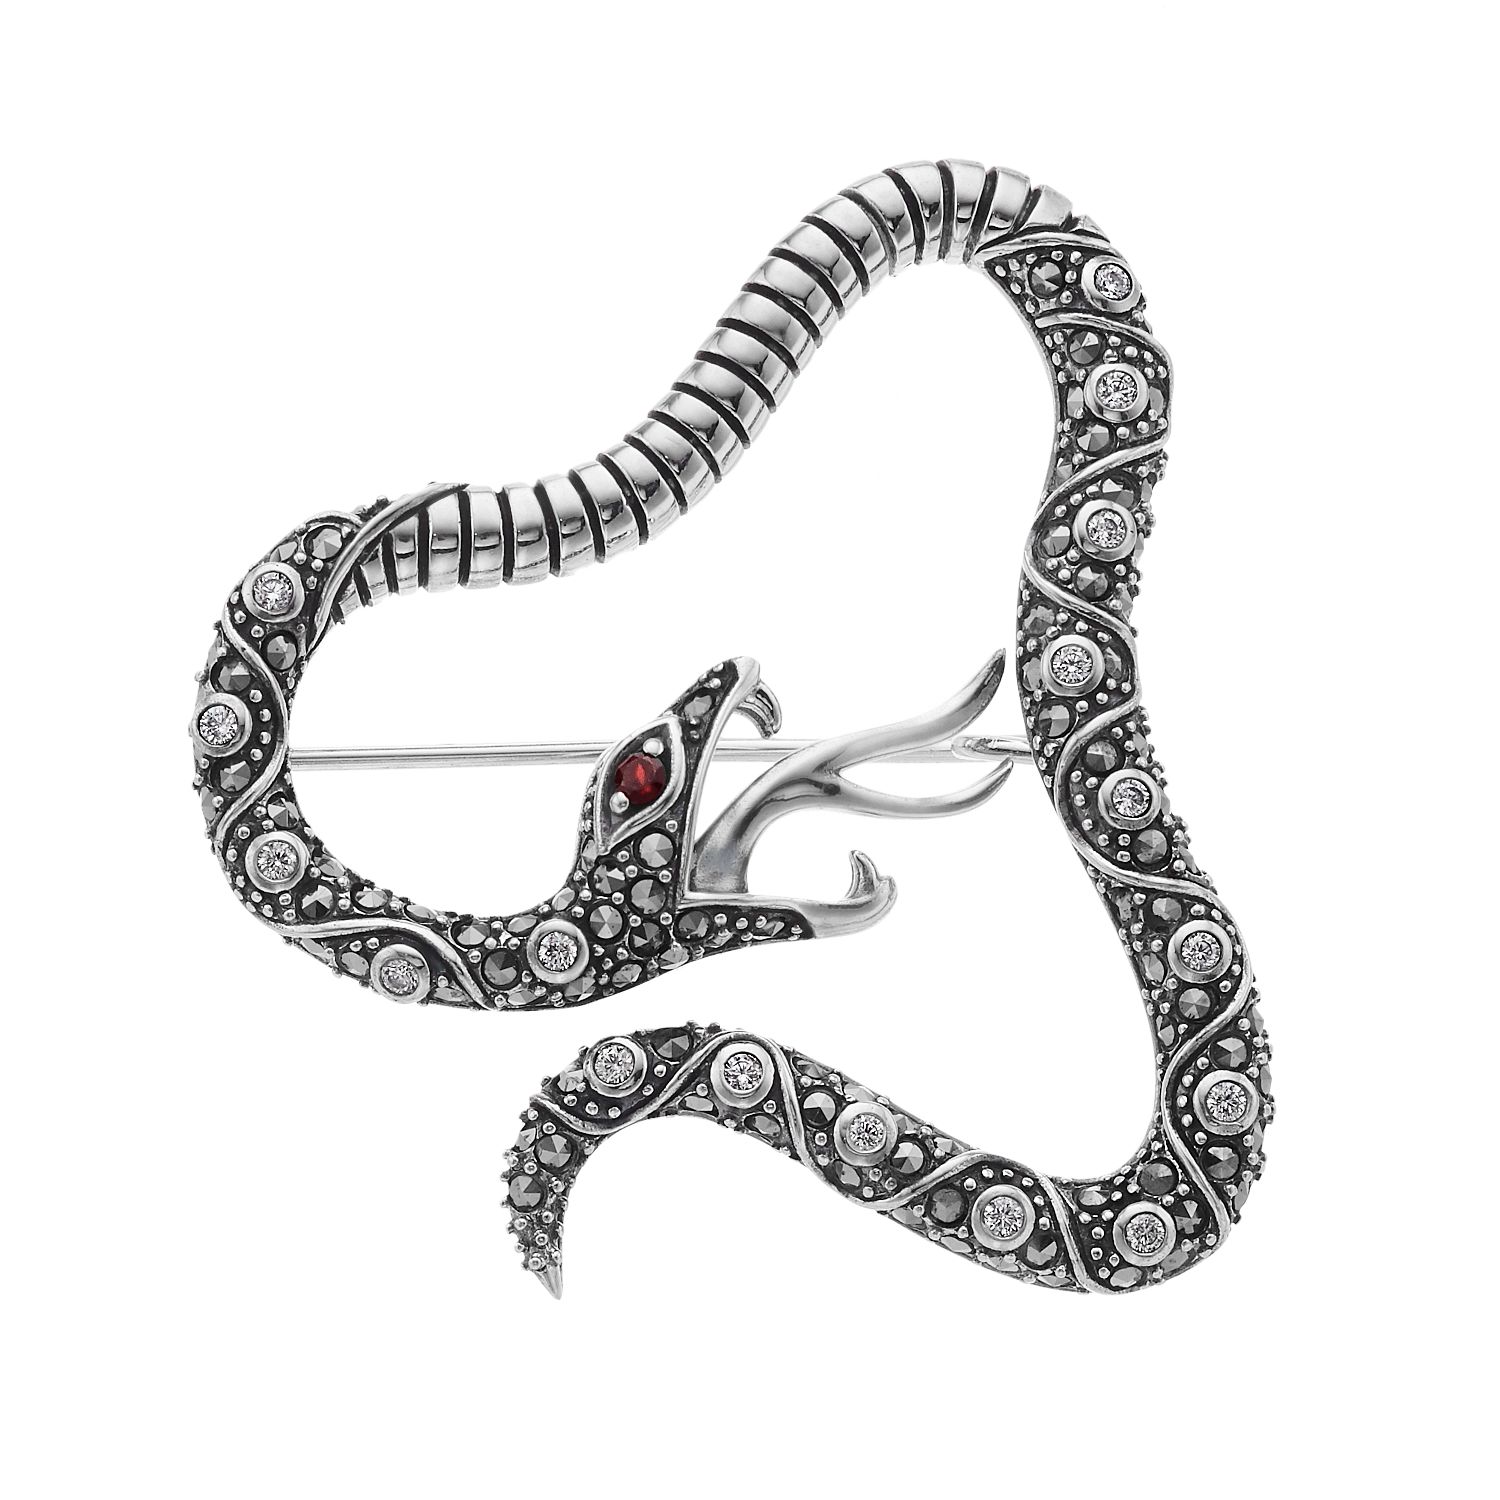 Image for Lavish by TJM Sterling Silver Garnet, Cubic Zirconia & Marcasite Serpent Brooch at Kohl's.